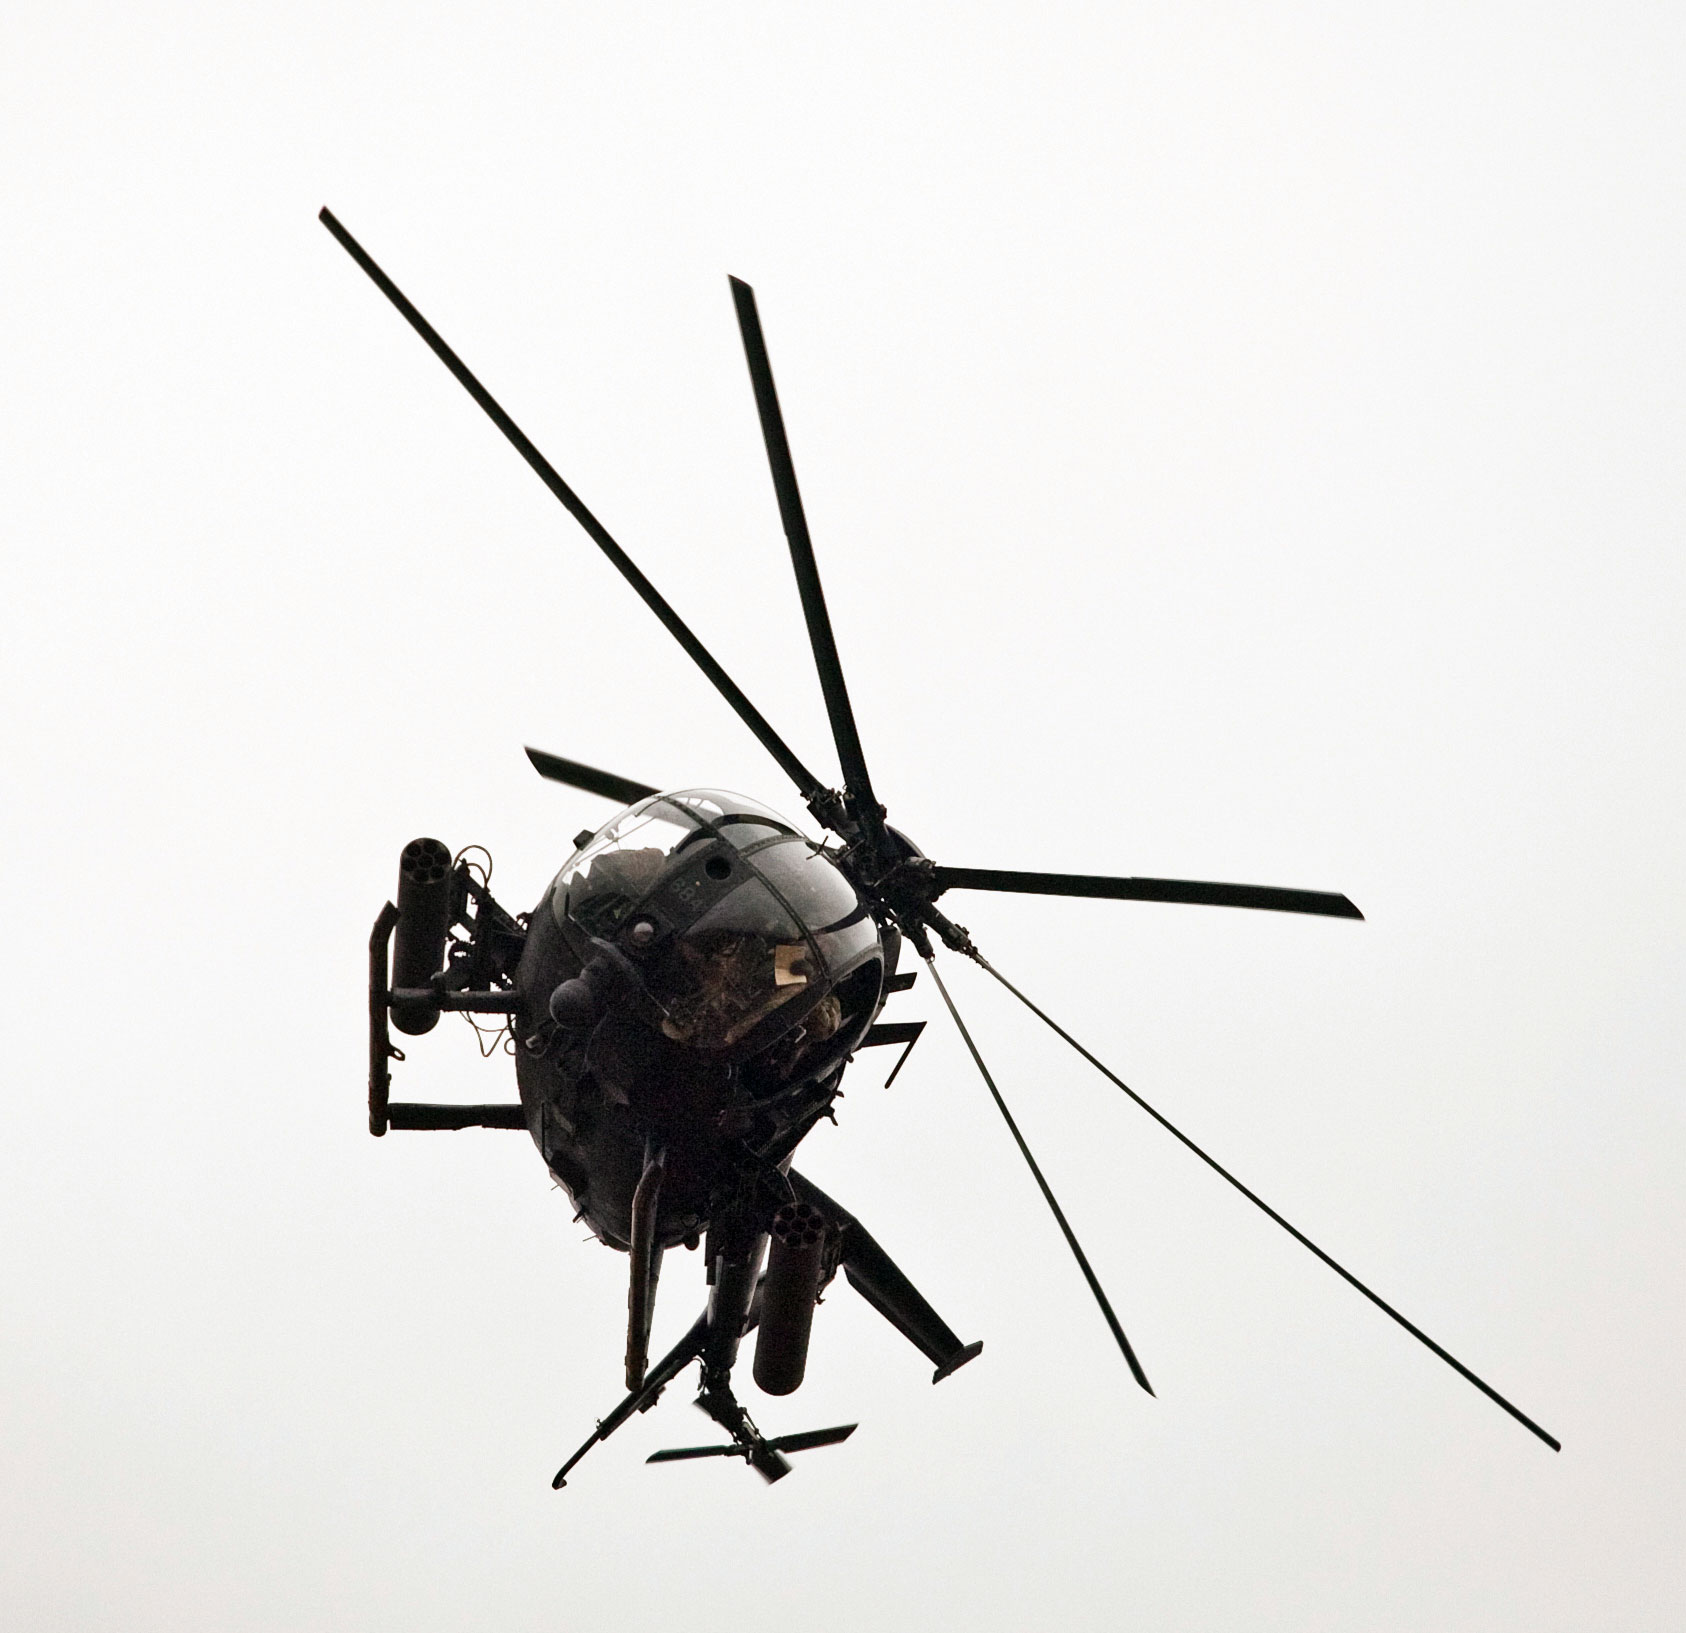 AH-6M Little Bird Helicopter